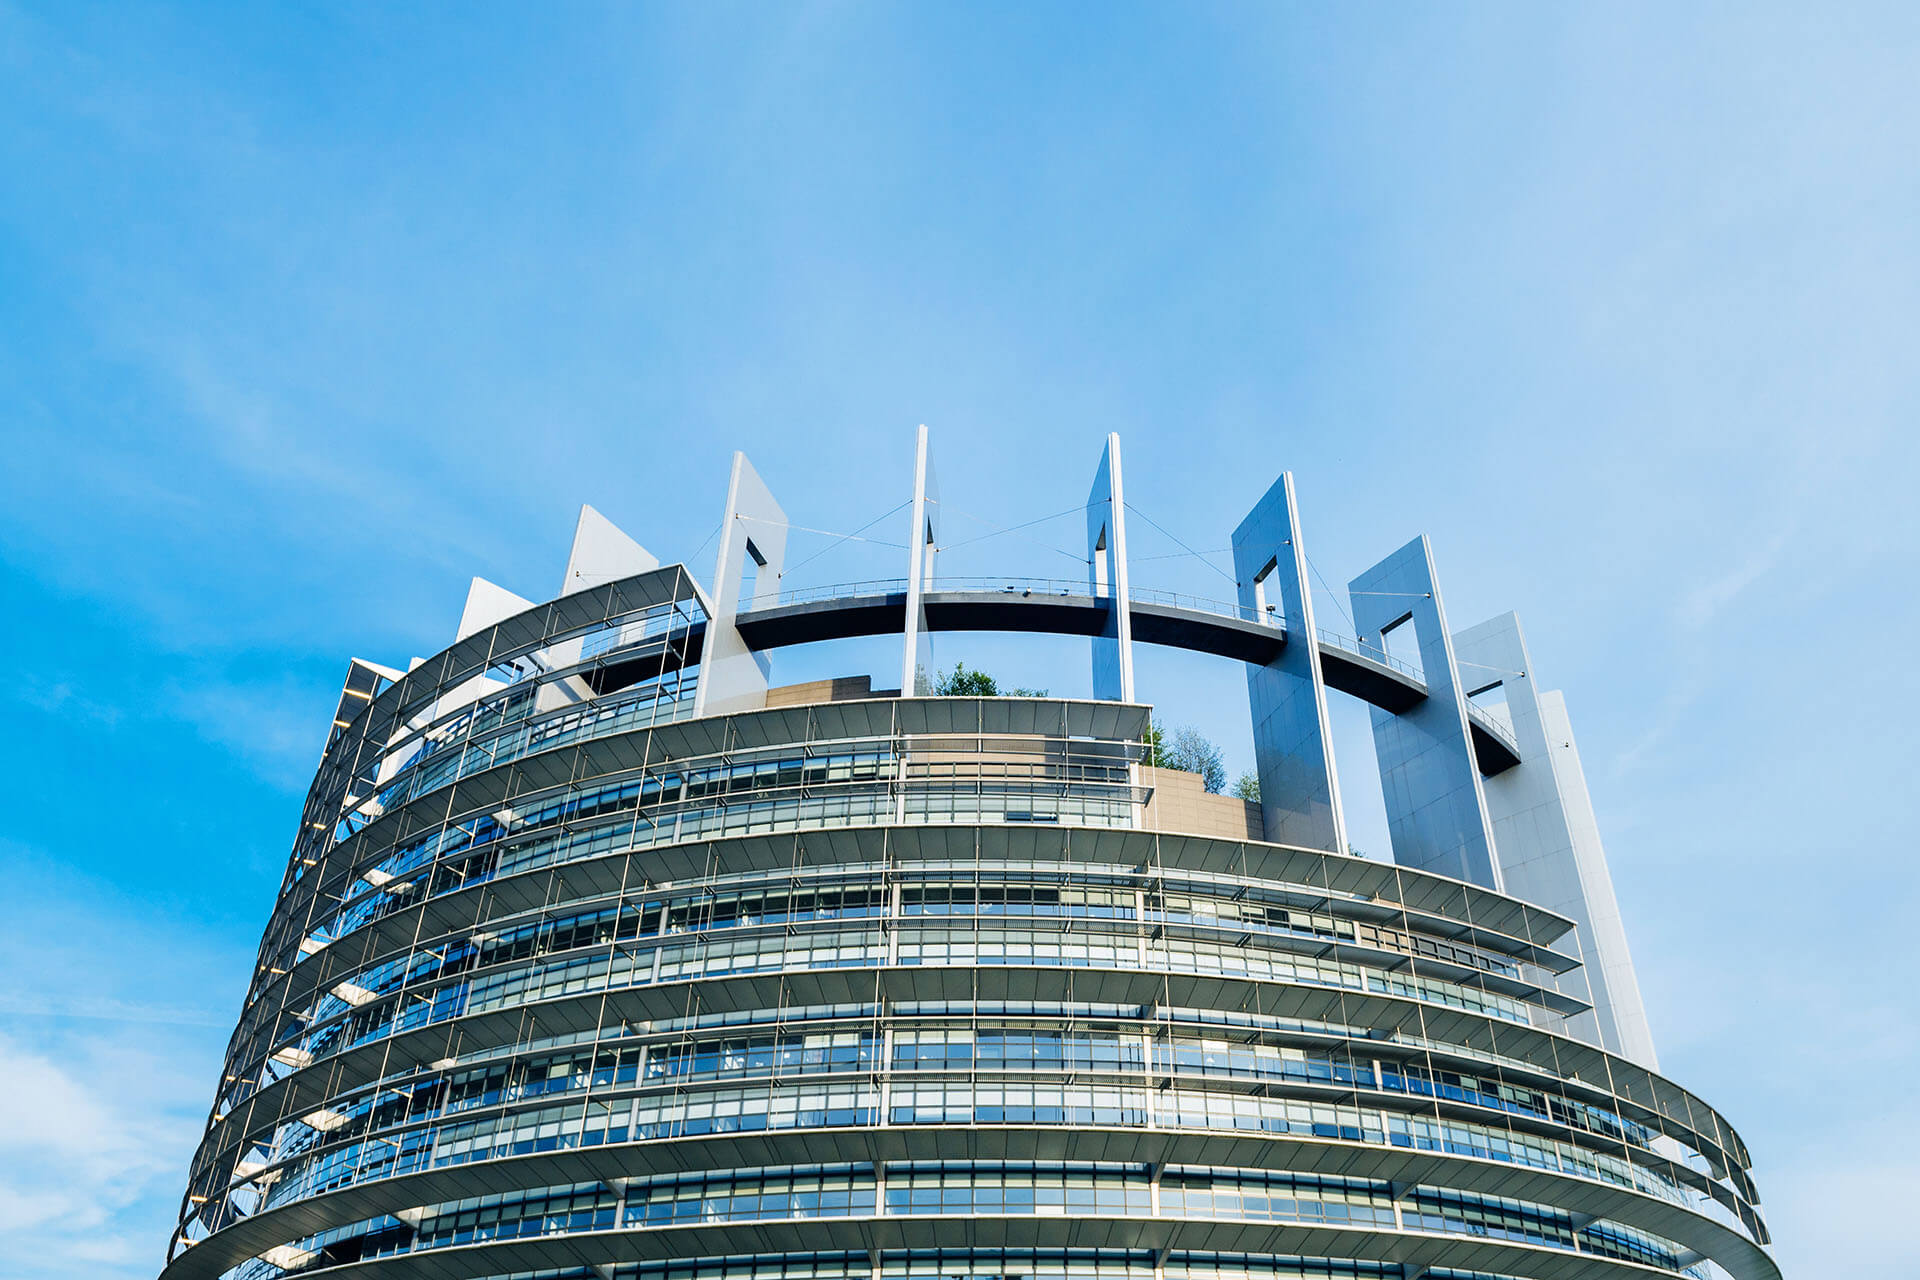 EU: The European Commission Delays Launch of ETIAS